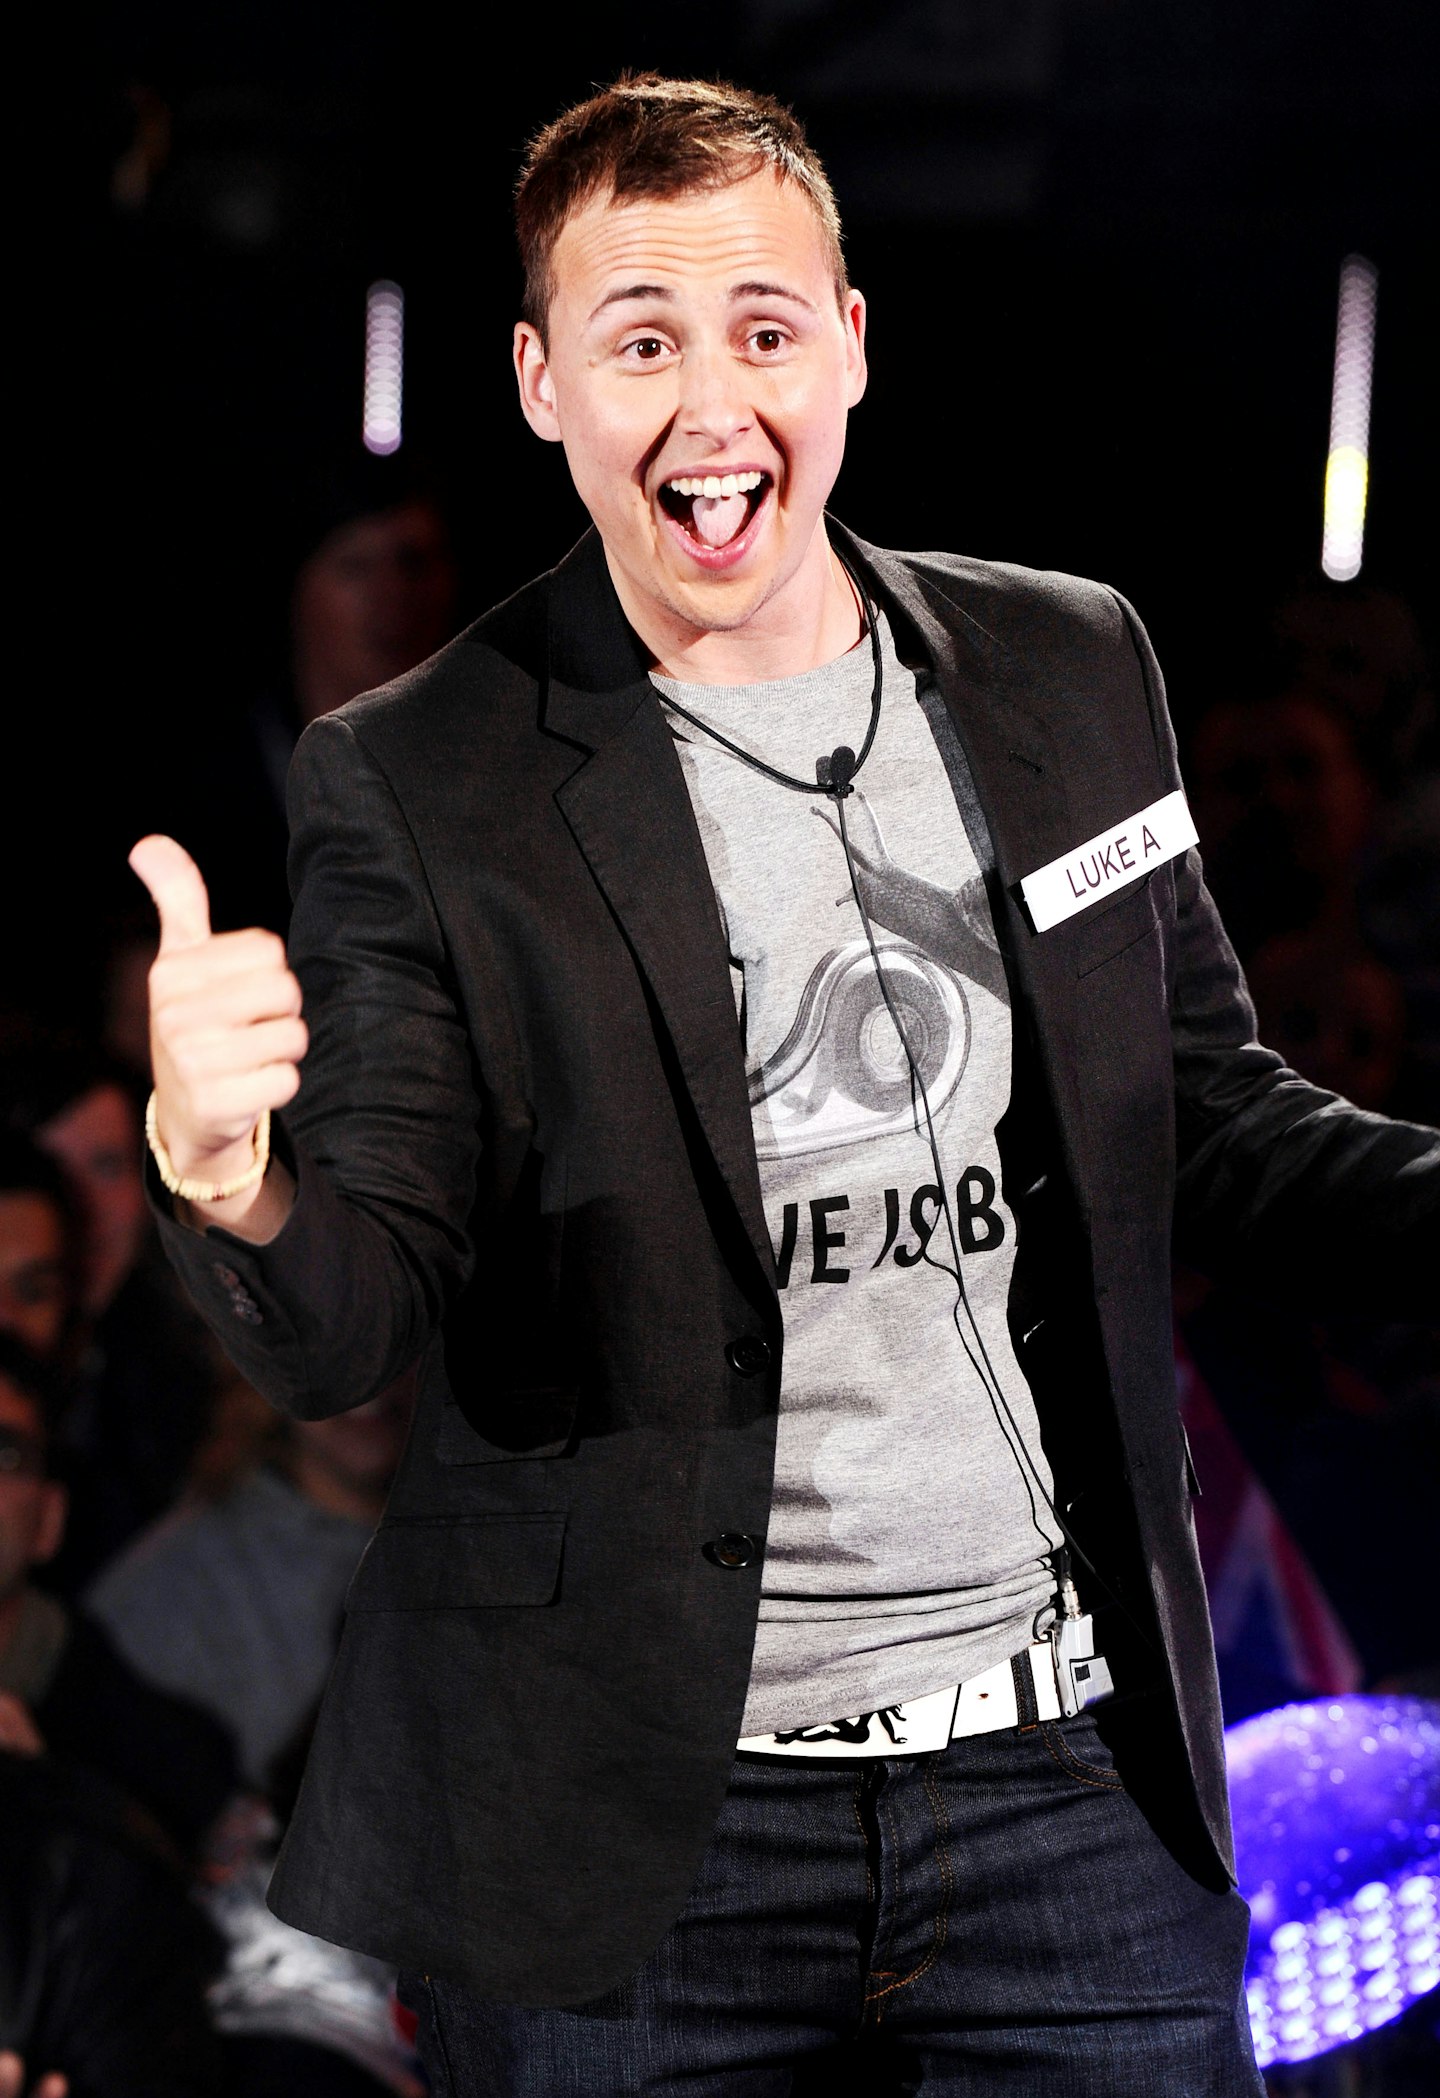 Luke Anderson (winner Big Brother 13 - 2012) then